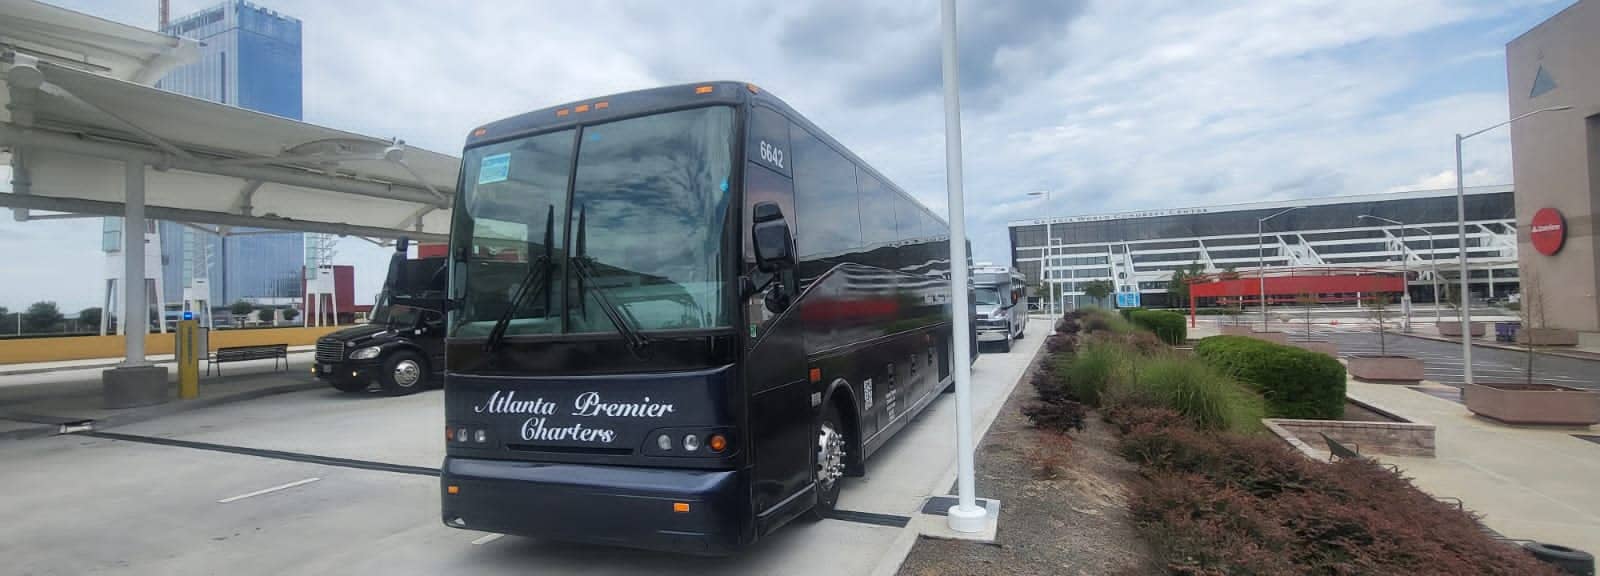 charter bus atlanta